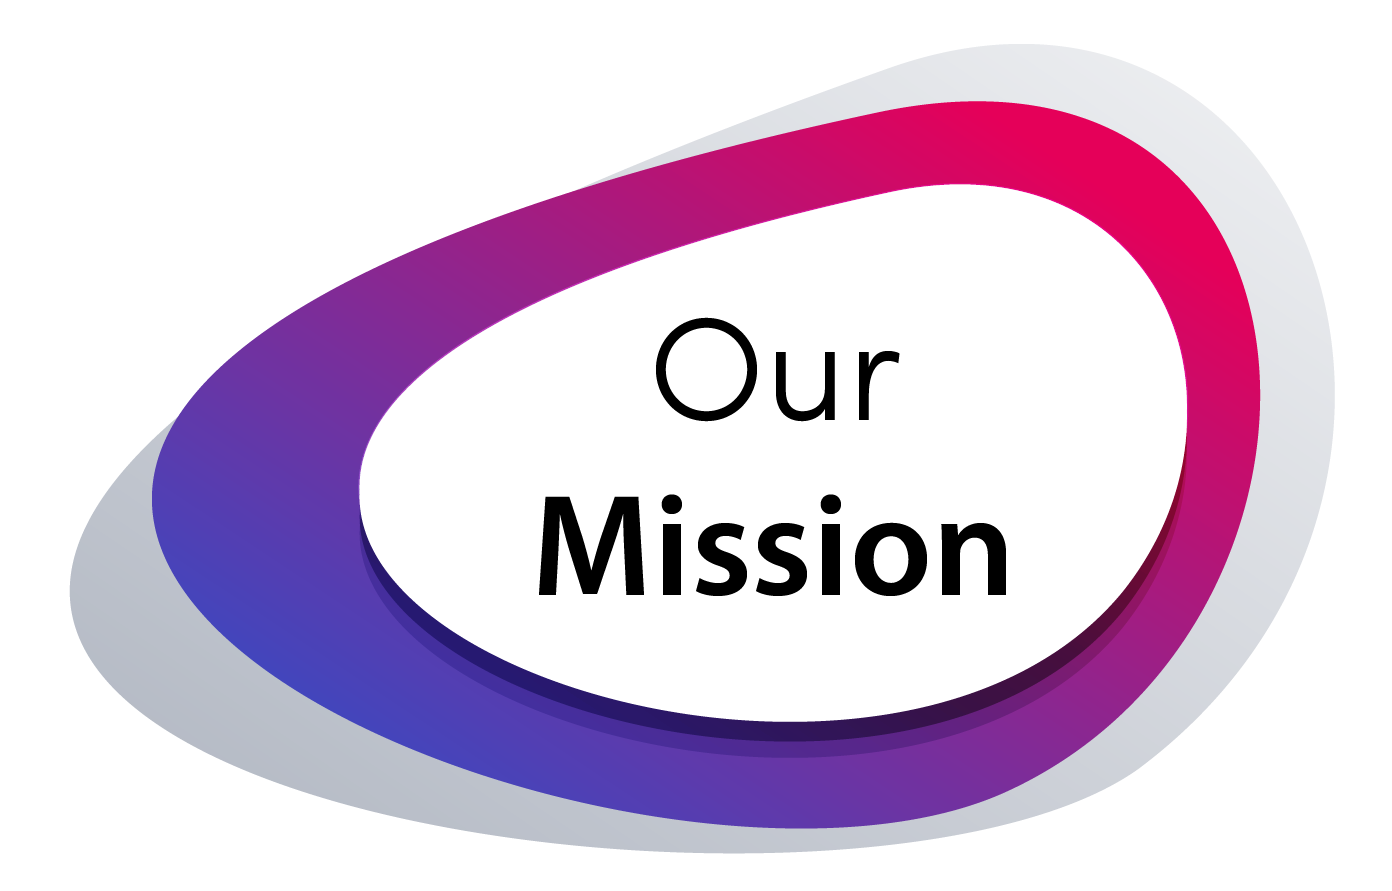 Our Mission Logo PNG High Definition Photo Image pngteam.com